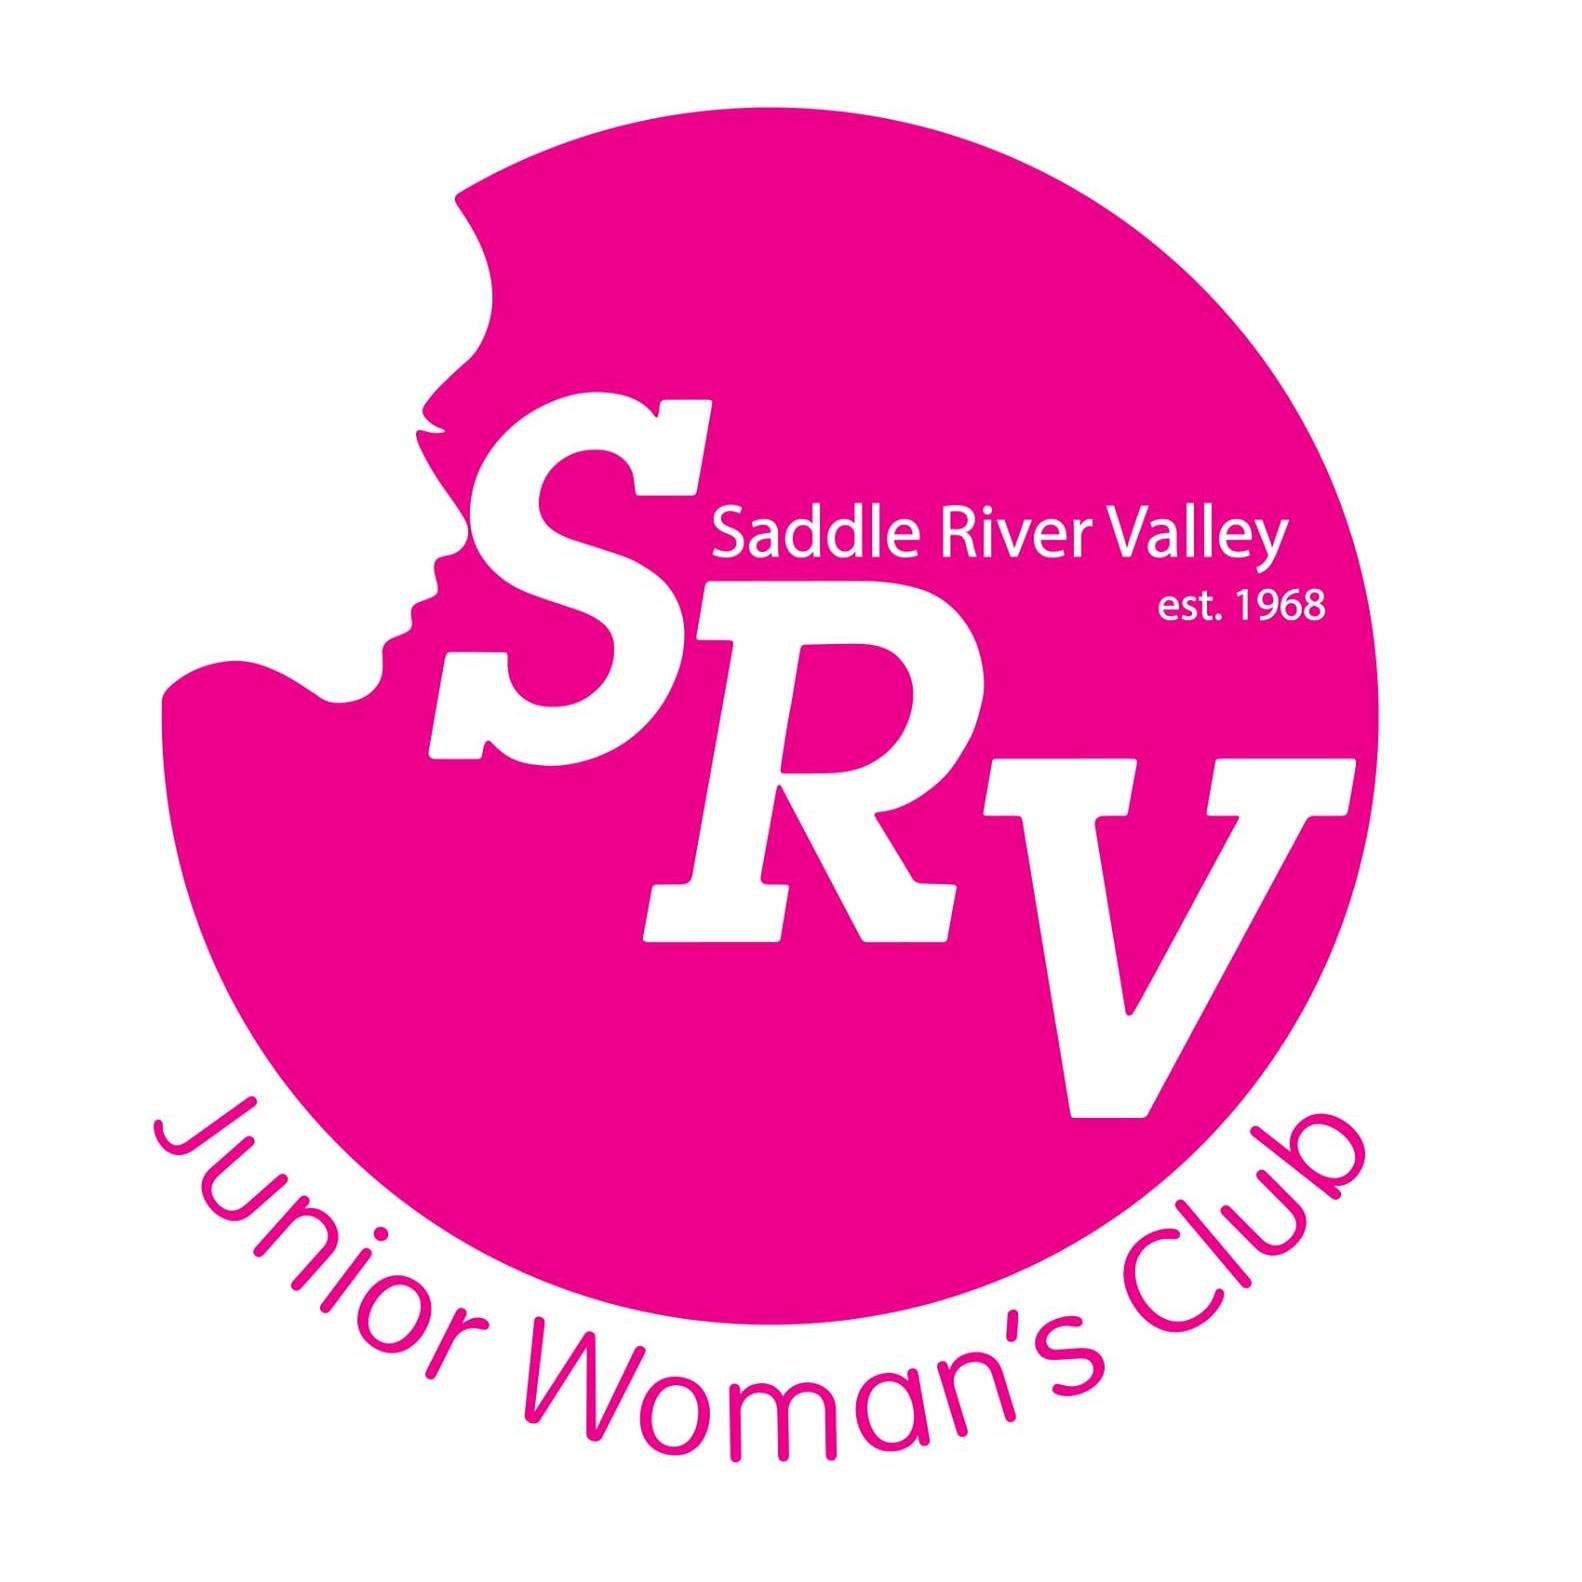 saddle river valley junior womans club logo